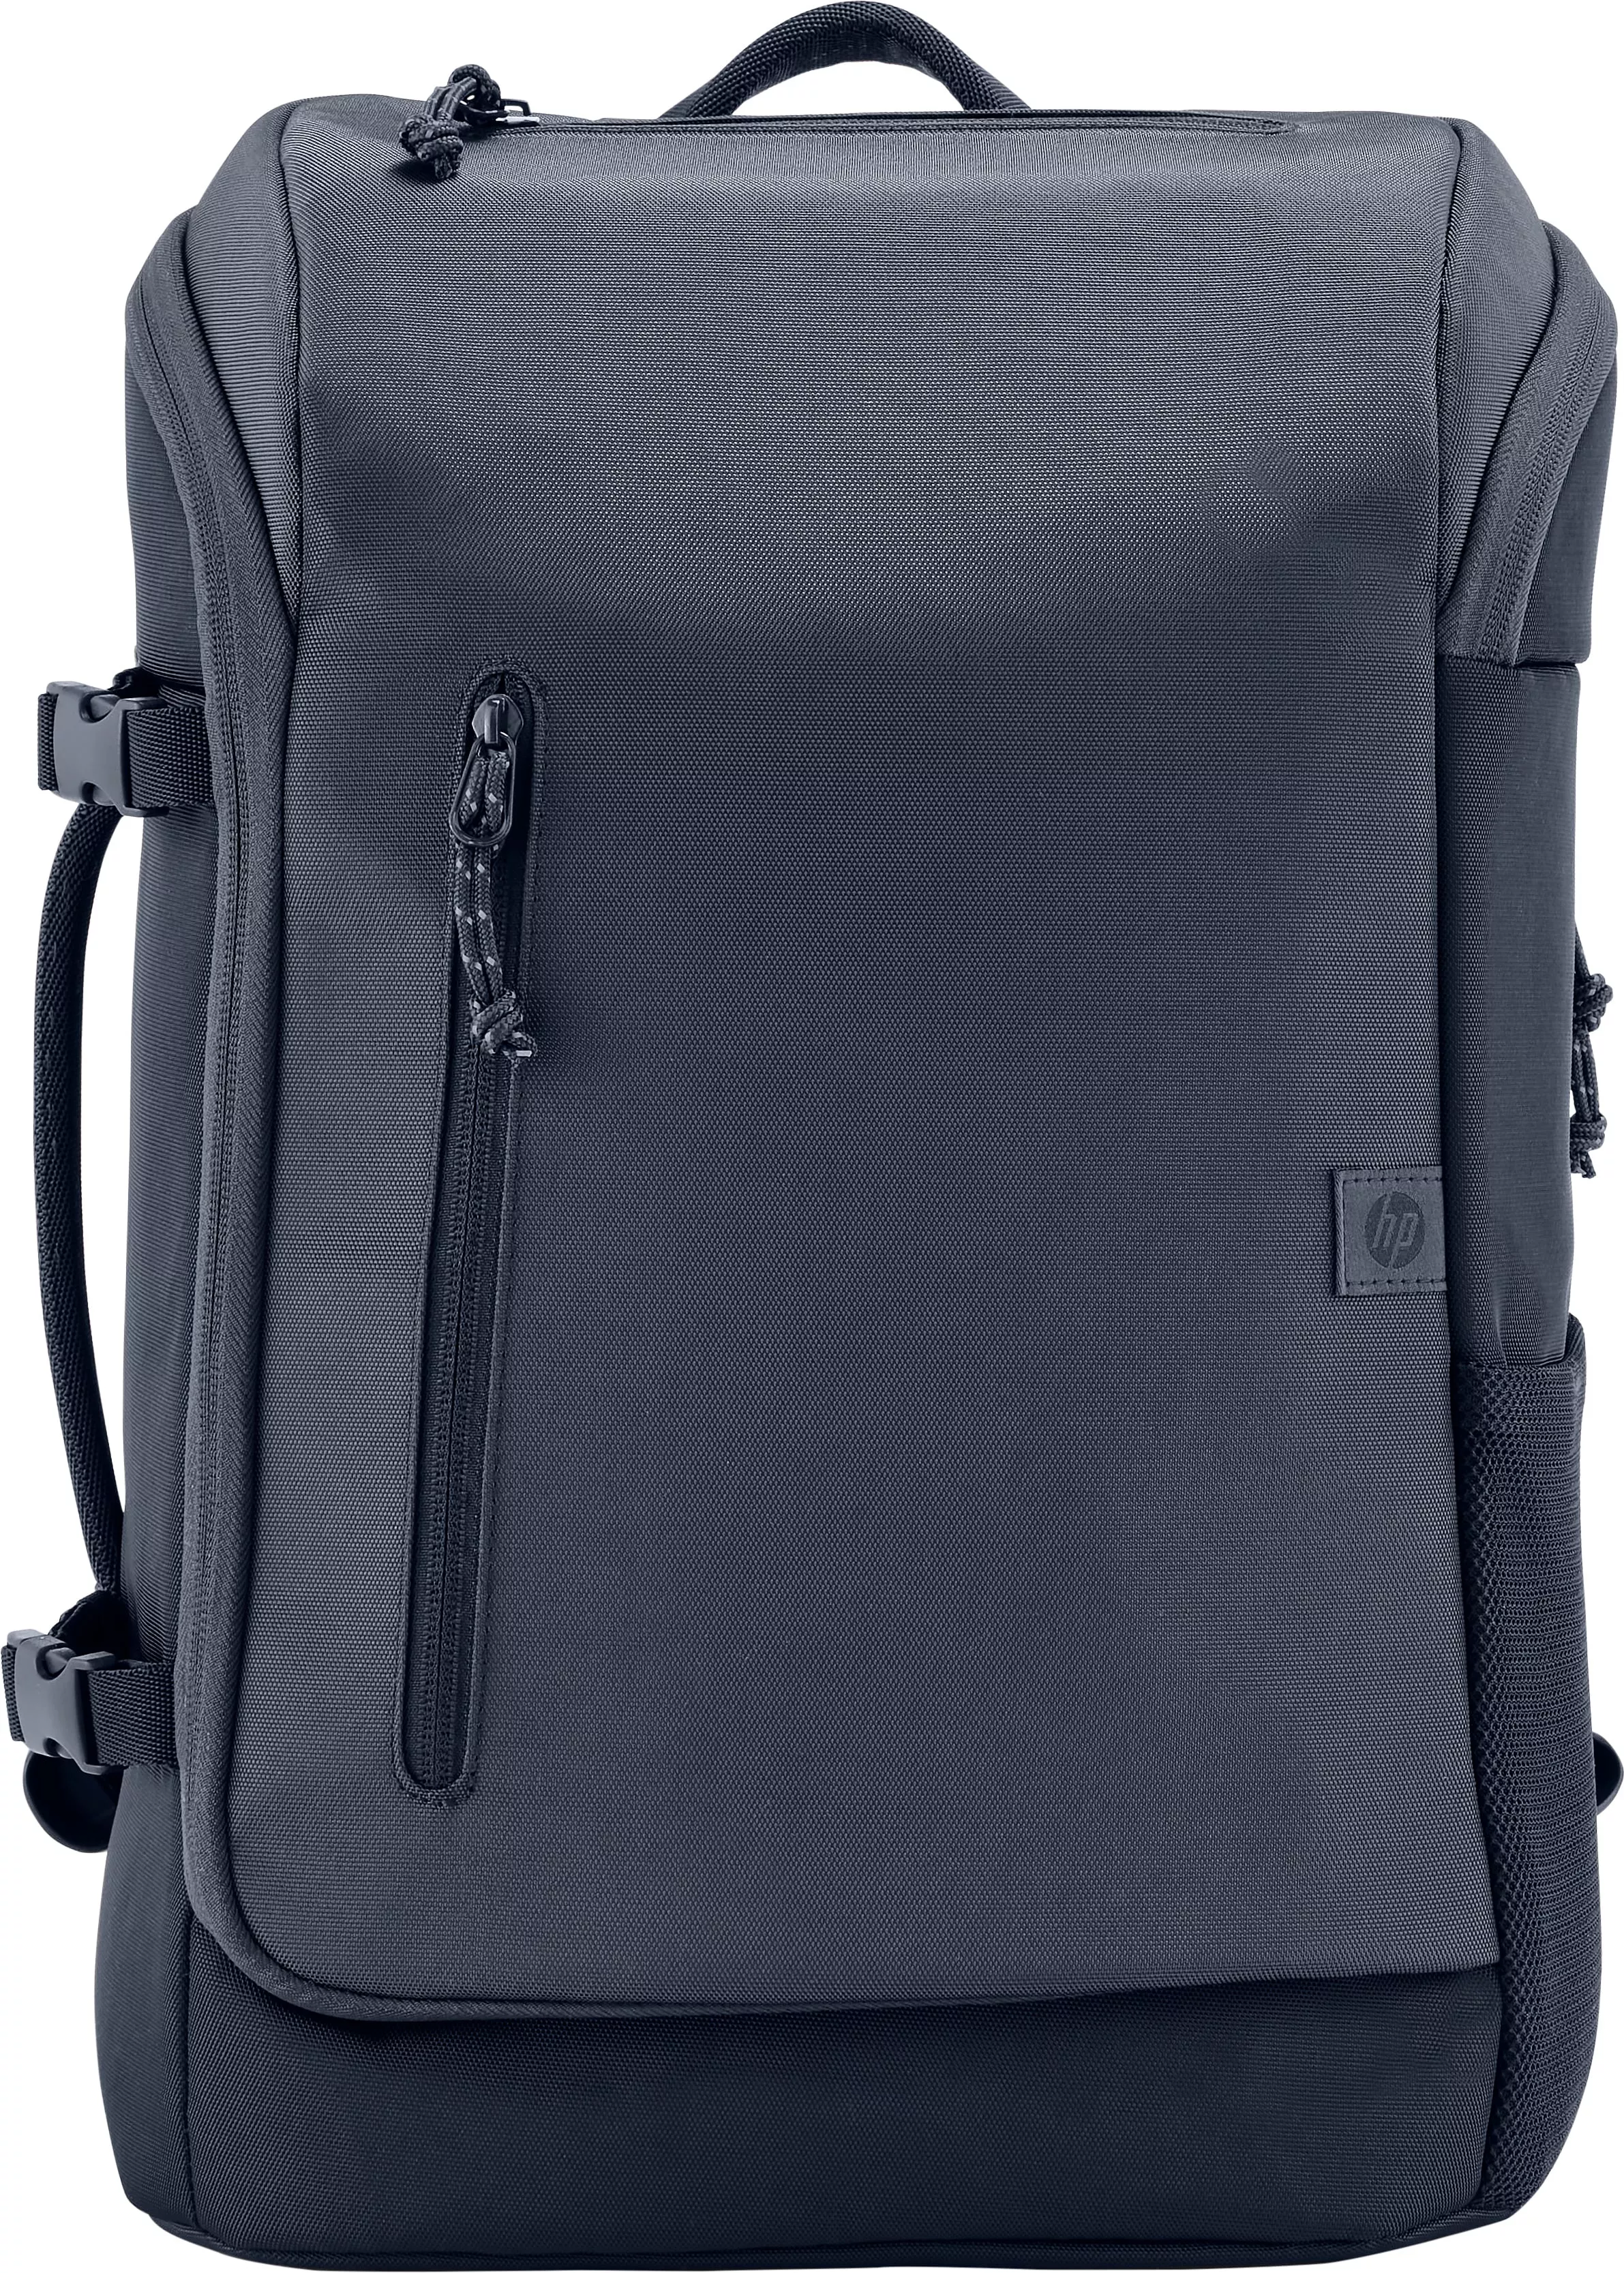 Achat HP Travel 25 Liter 15.6p Iron Grey Laptop Backpack au meilleur prix